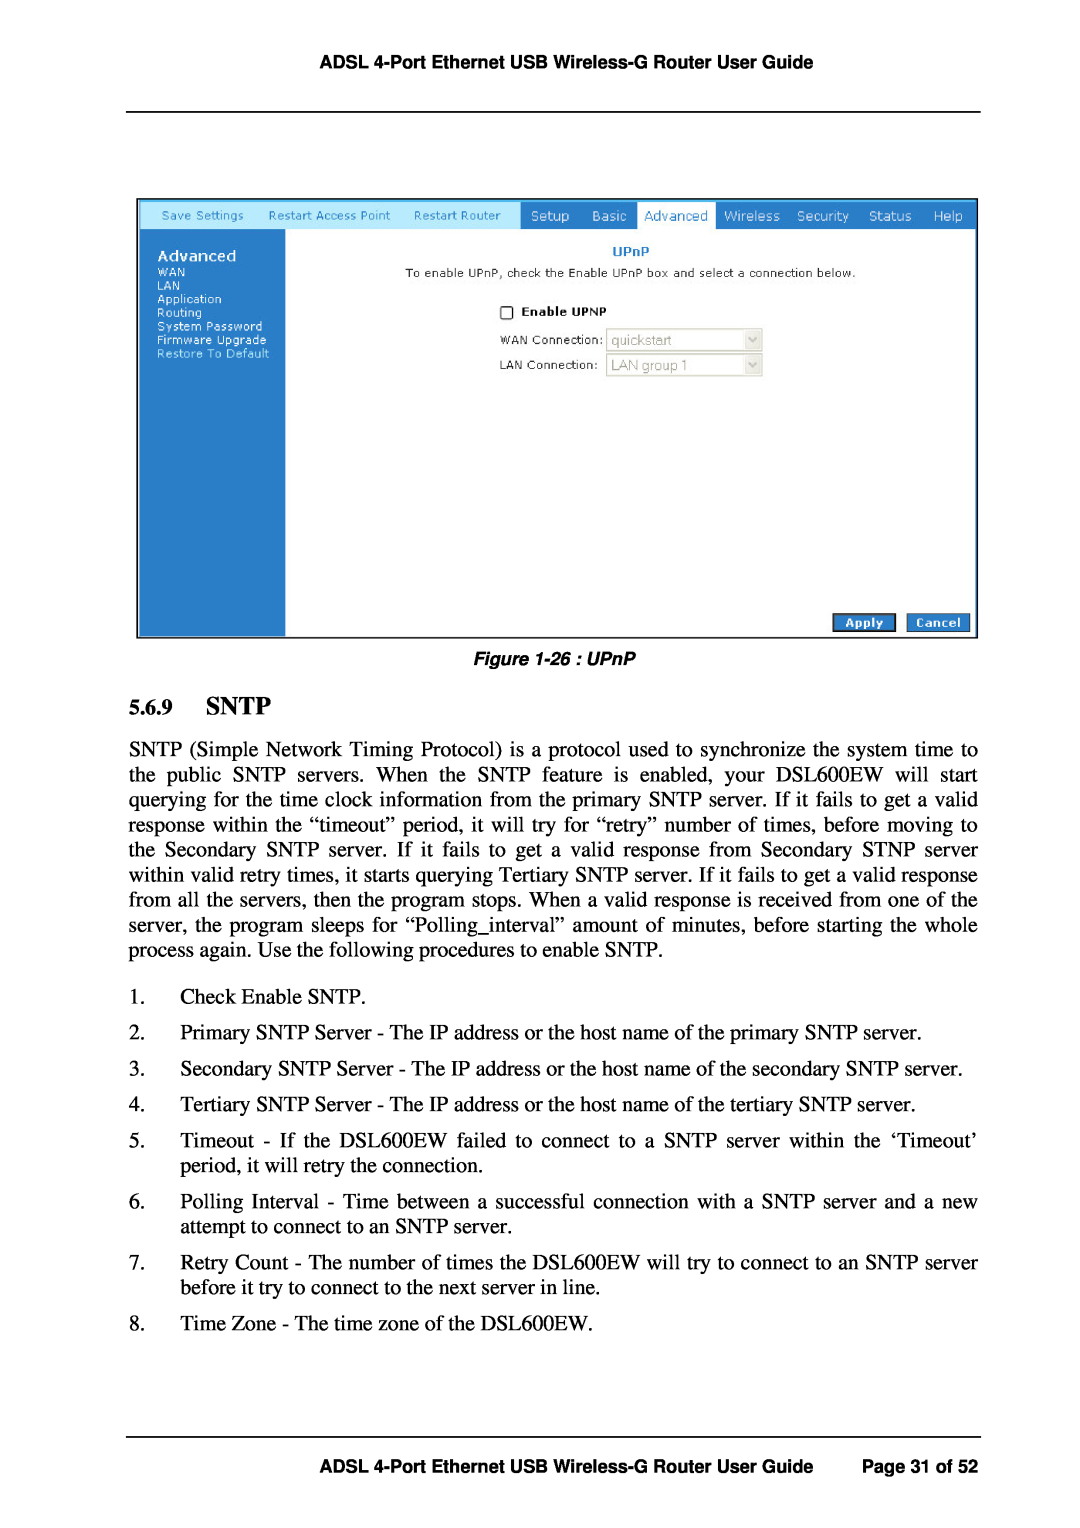 APC ADSL 4-Port manual Sntp 